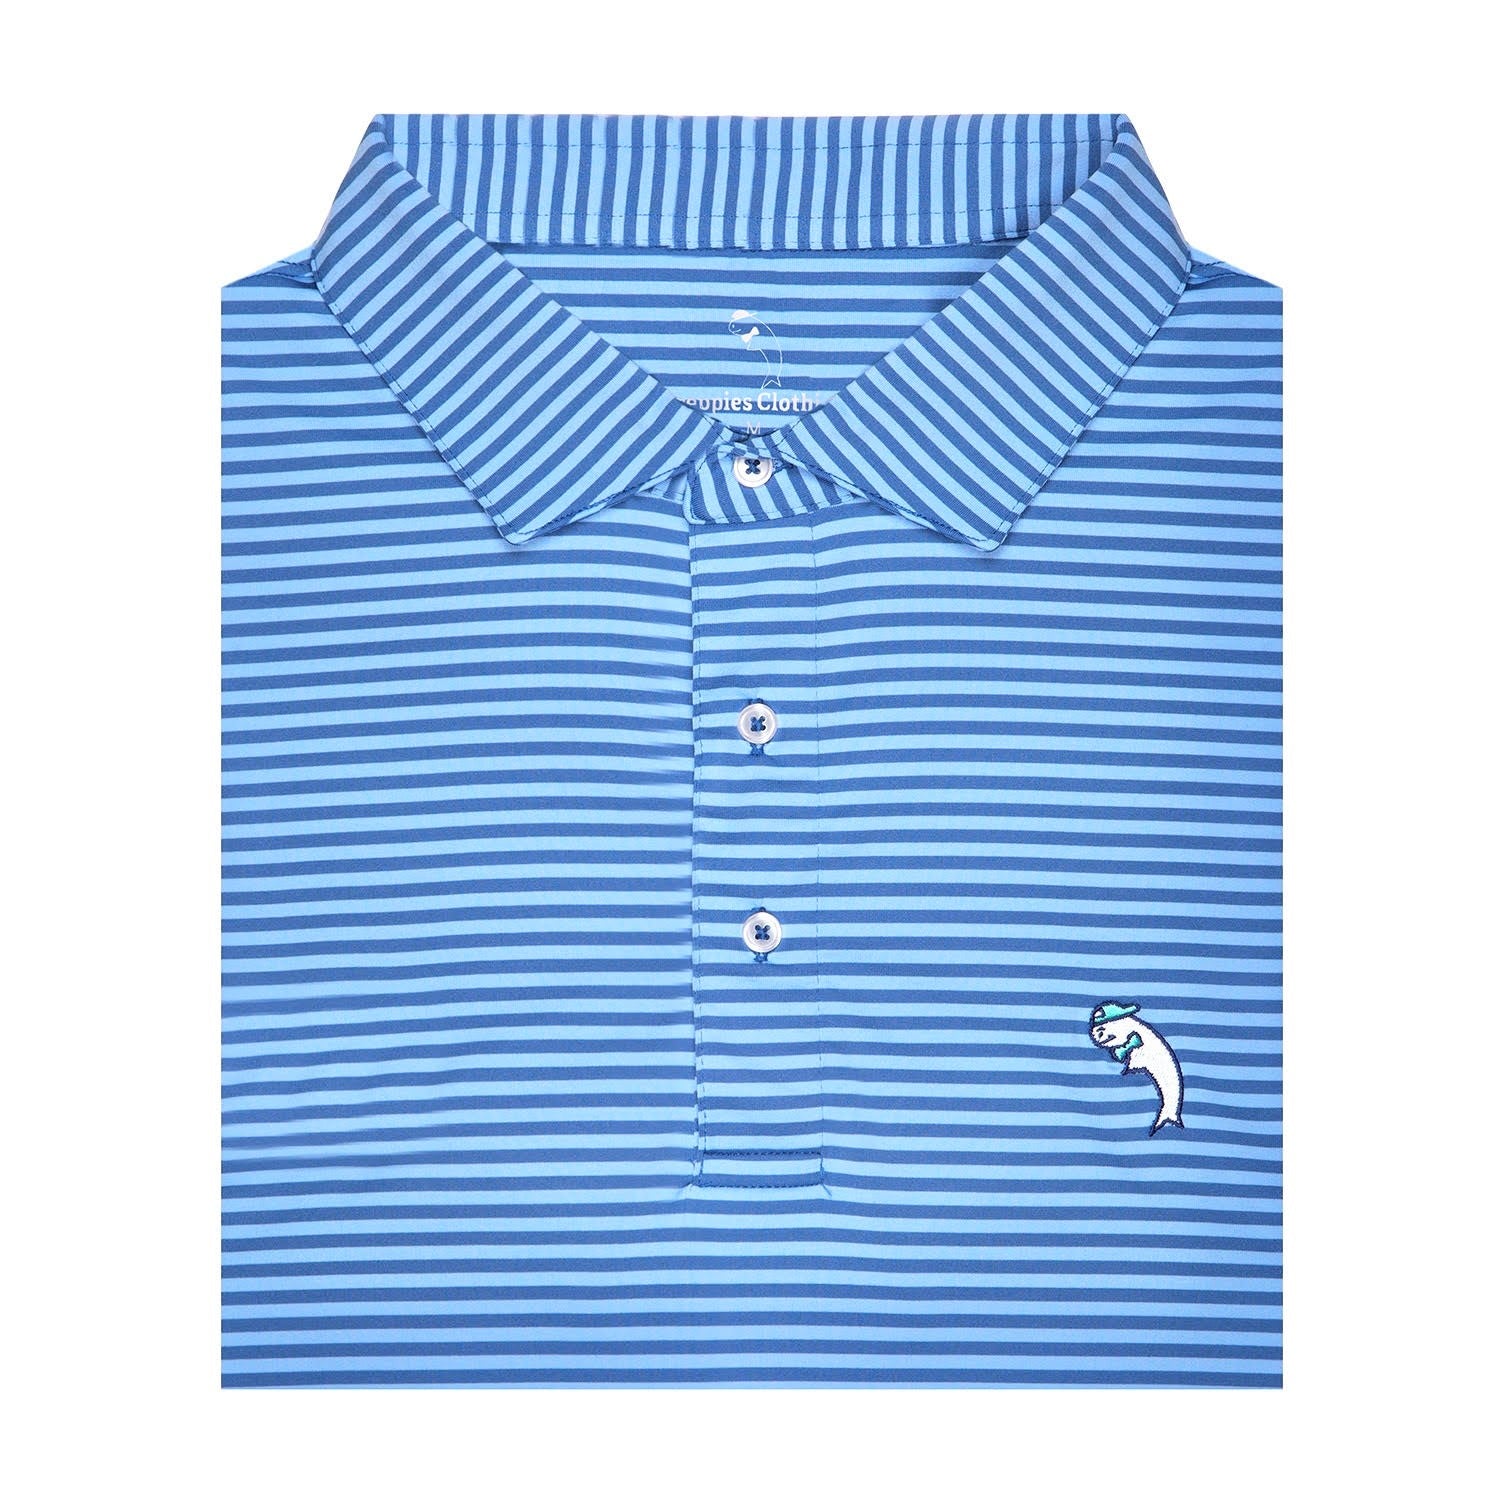 Harbour Men's Polo Shirt - Navy XXL